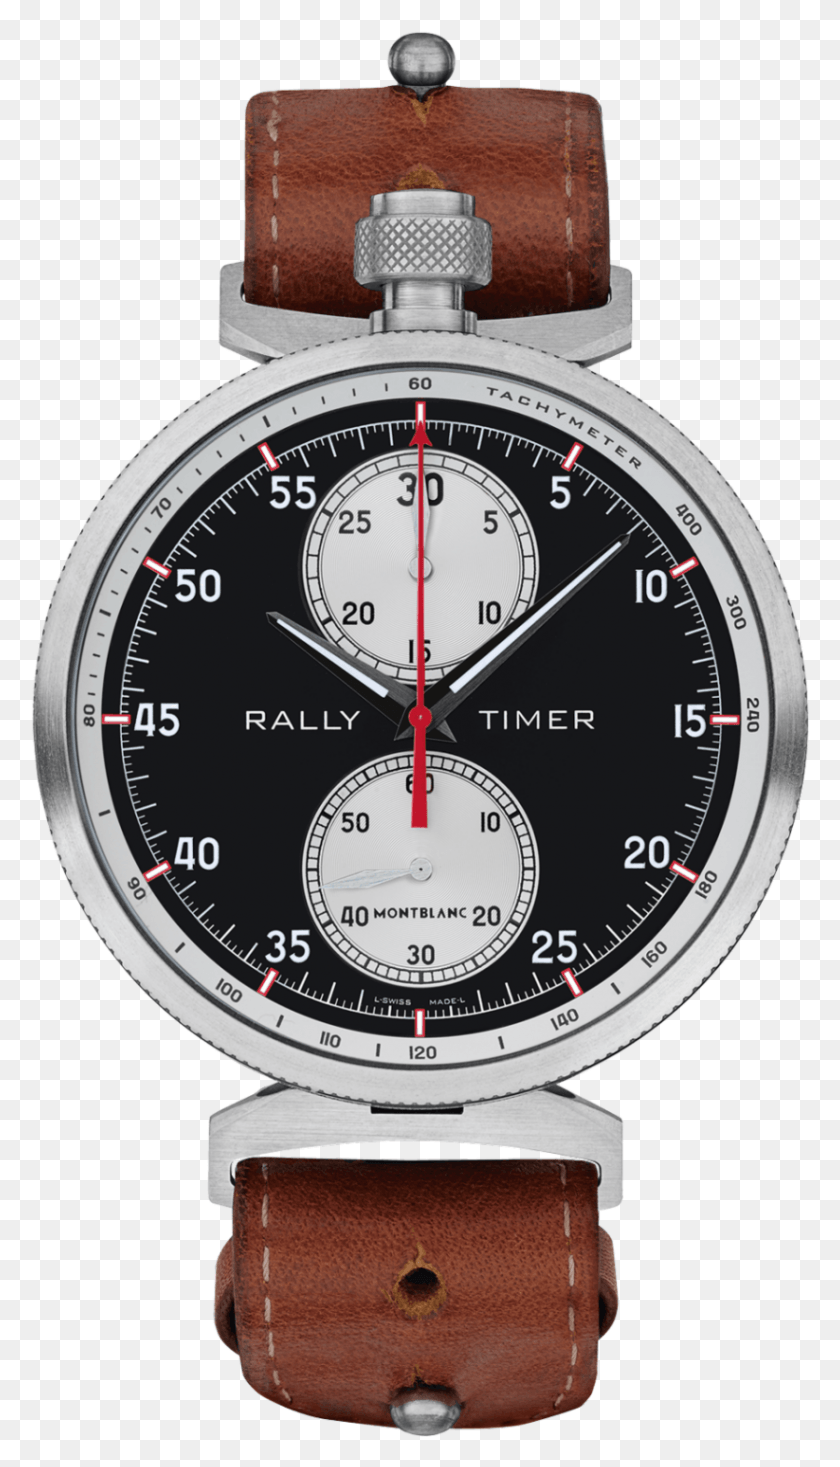 823x1485 Descargar Png Montblanc Timewalker Rally Timer Chronograph Limited Fossil Georgia Smoke Leather, Reloj De Pulsera, Calibre, Torre Del Reloj Hd Png